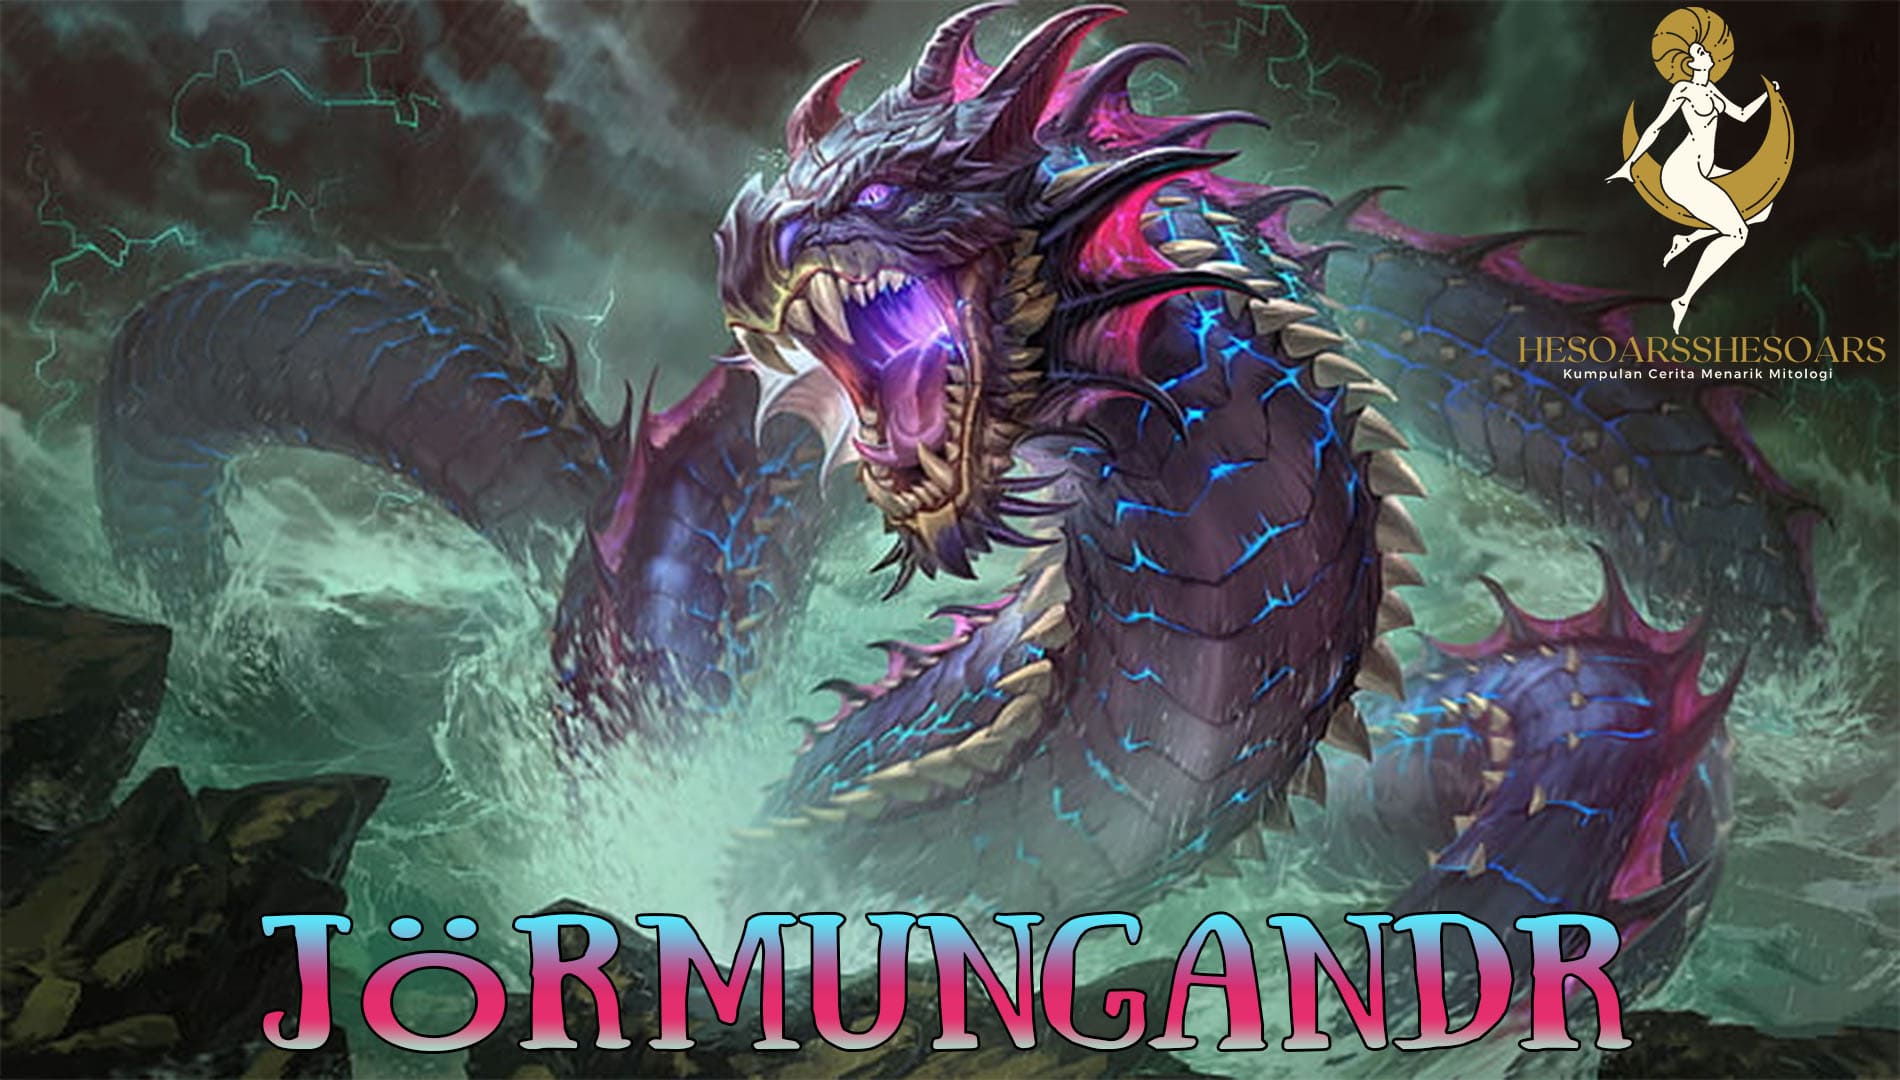 Jörmungandr: The Midgard Serpent in Norse Mythology